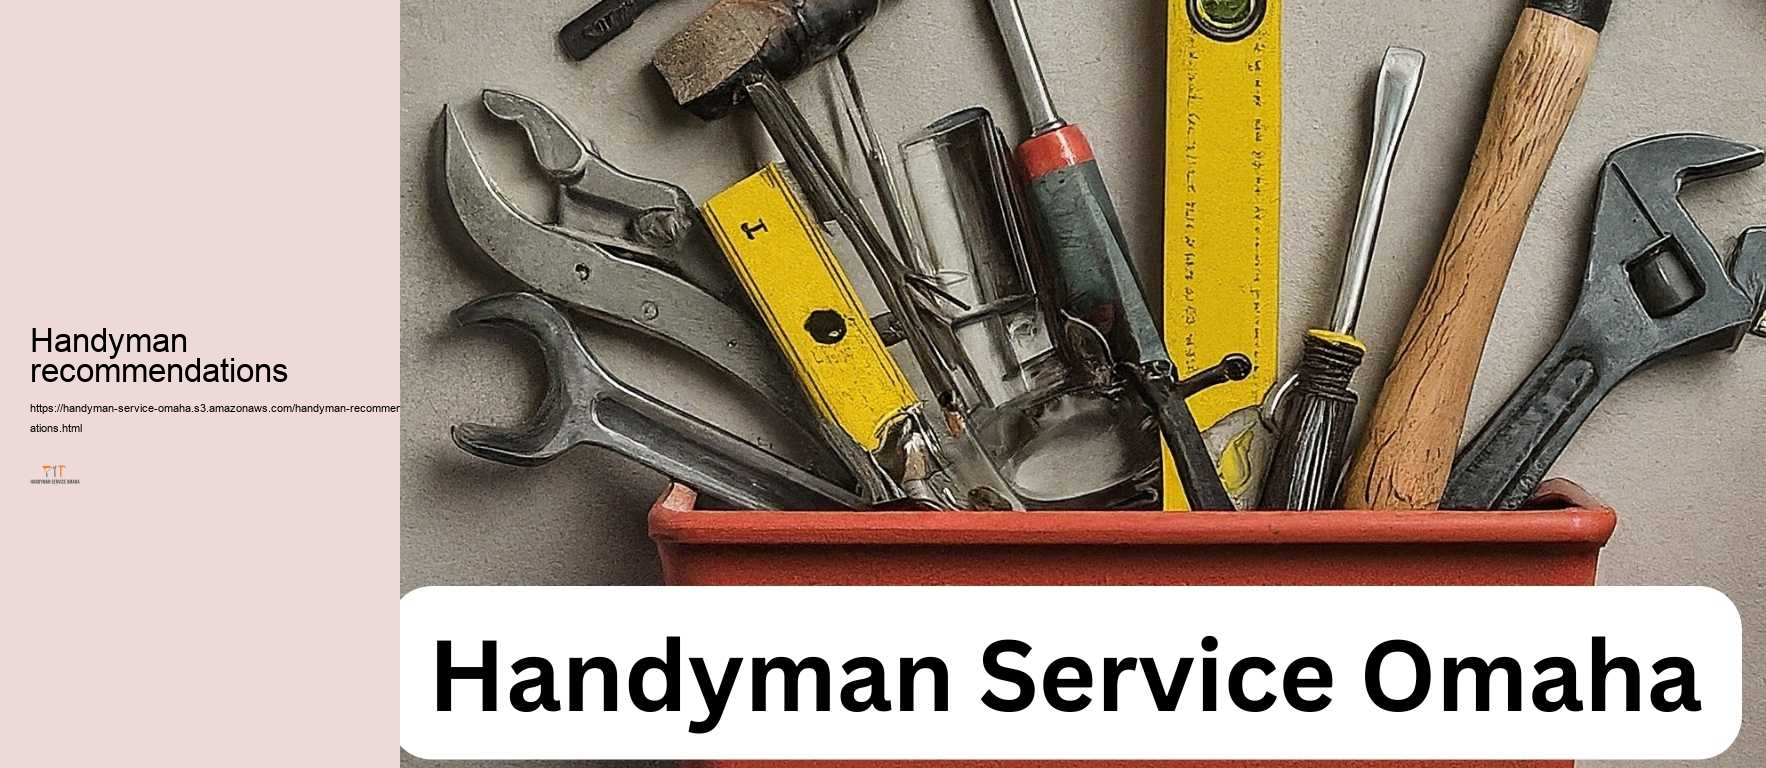 Handyman recommendations